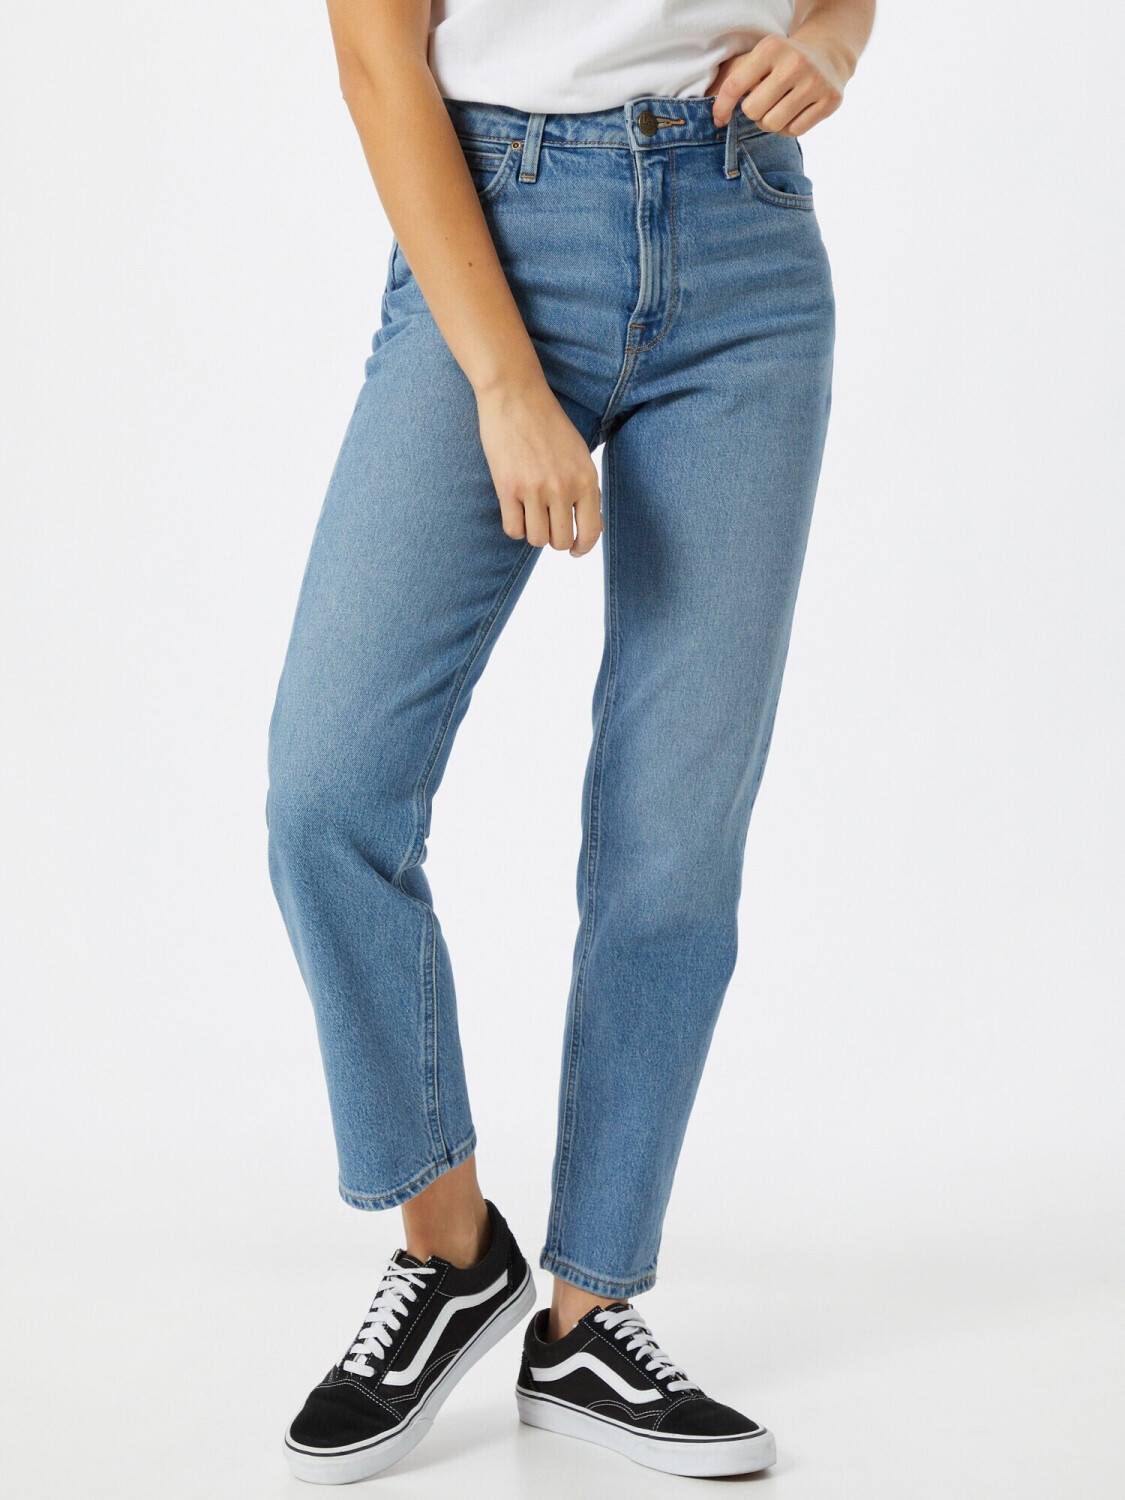 Buy Lee Women Carol Jeans mid soho from £12.50 (Today) – Best Deals on ...